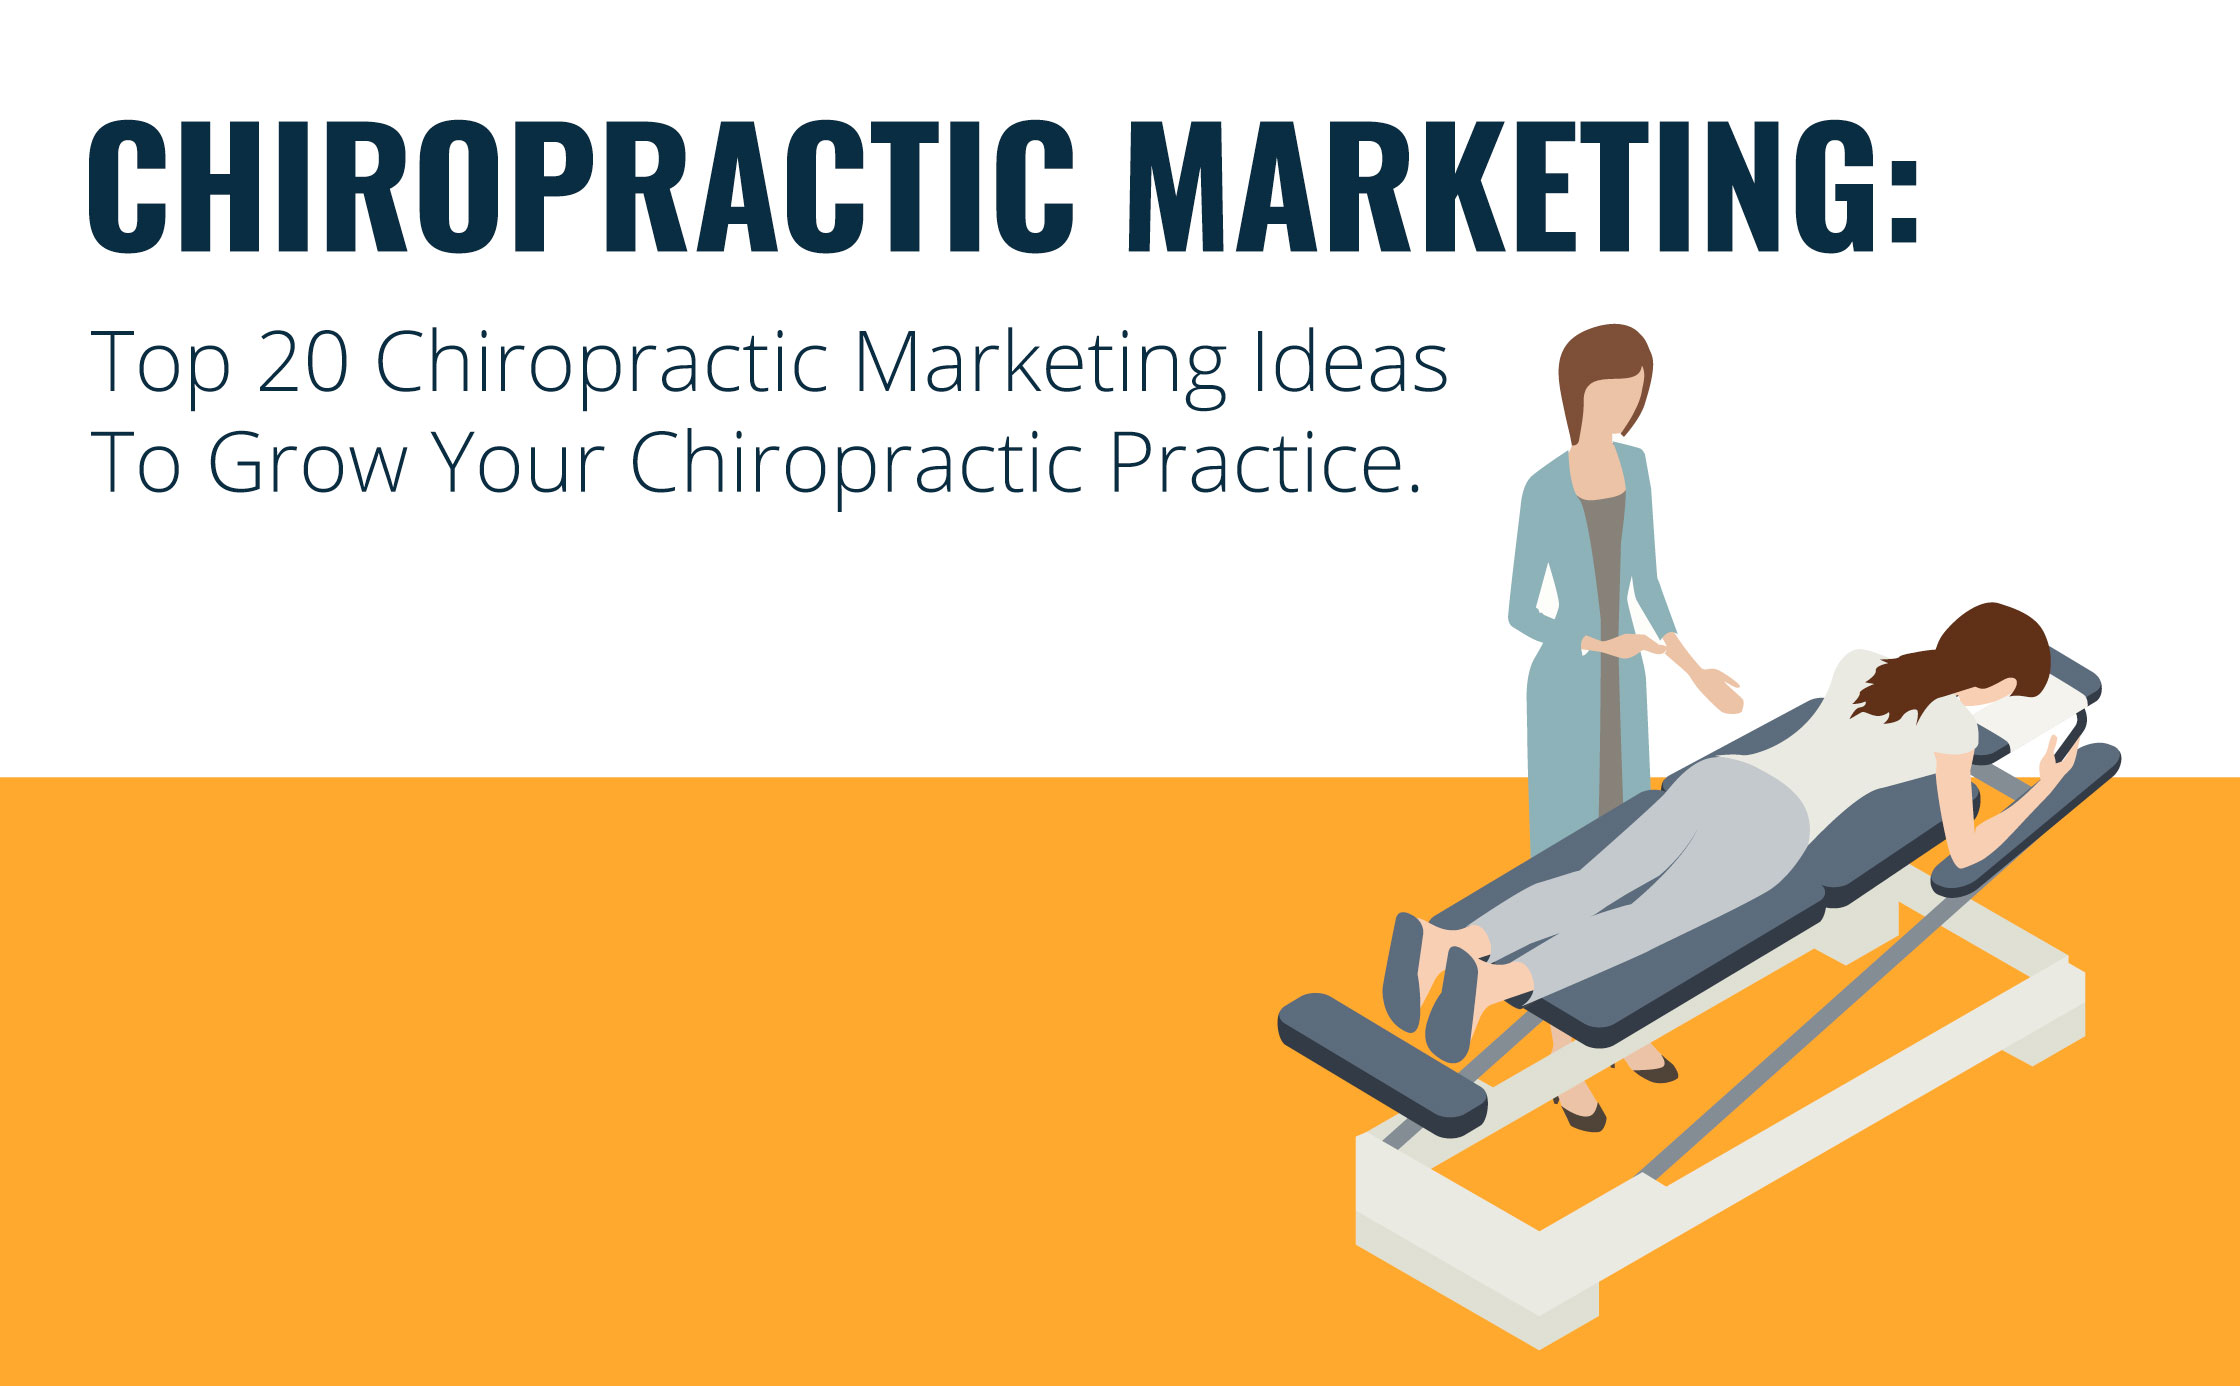 Top 20 Chiropractic Marketing Ideas